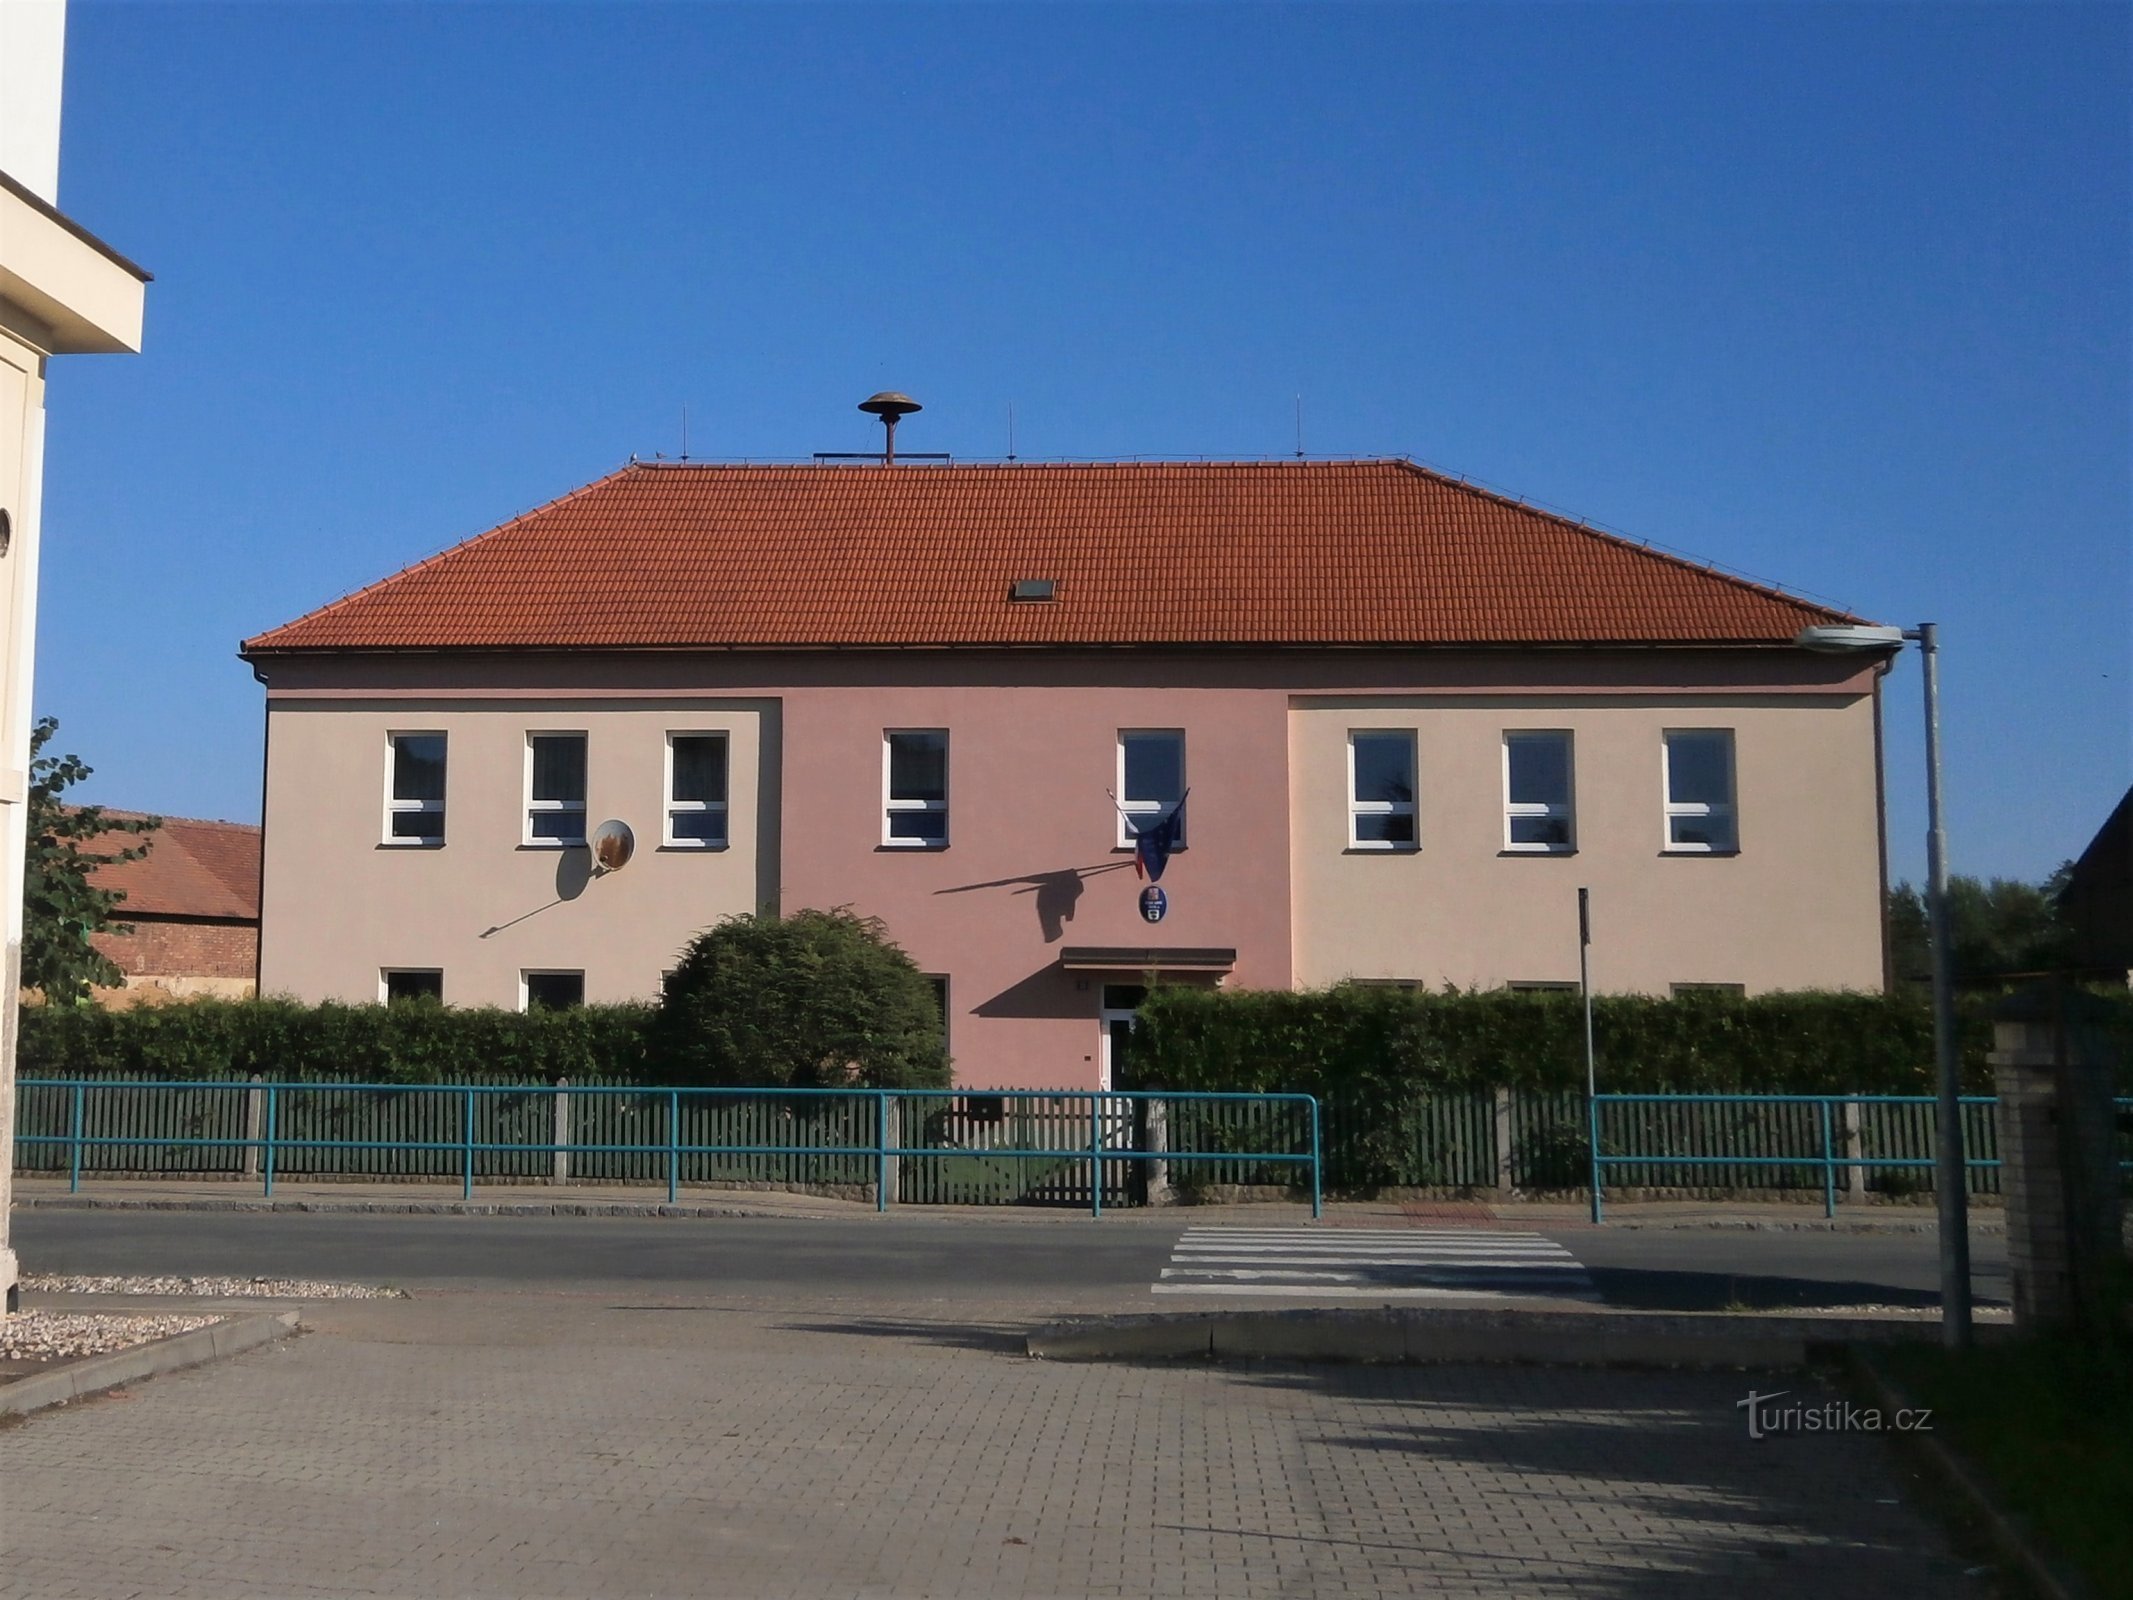 École (Staré Ždánice, 30.7.2017/XNUMX/XNUMX)